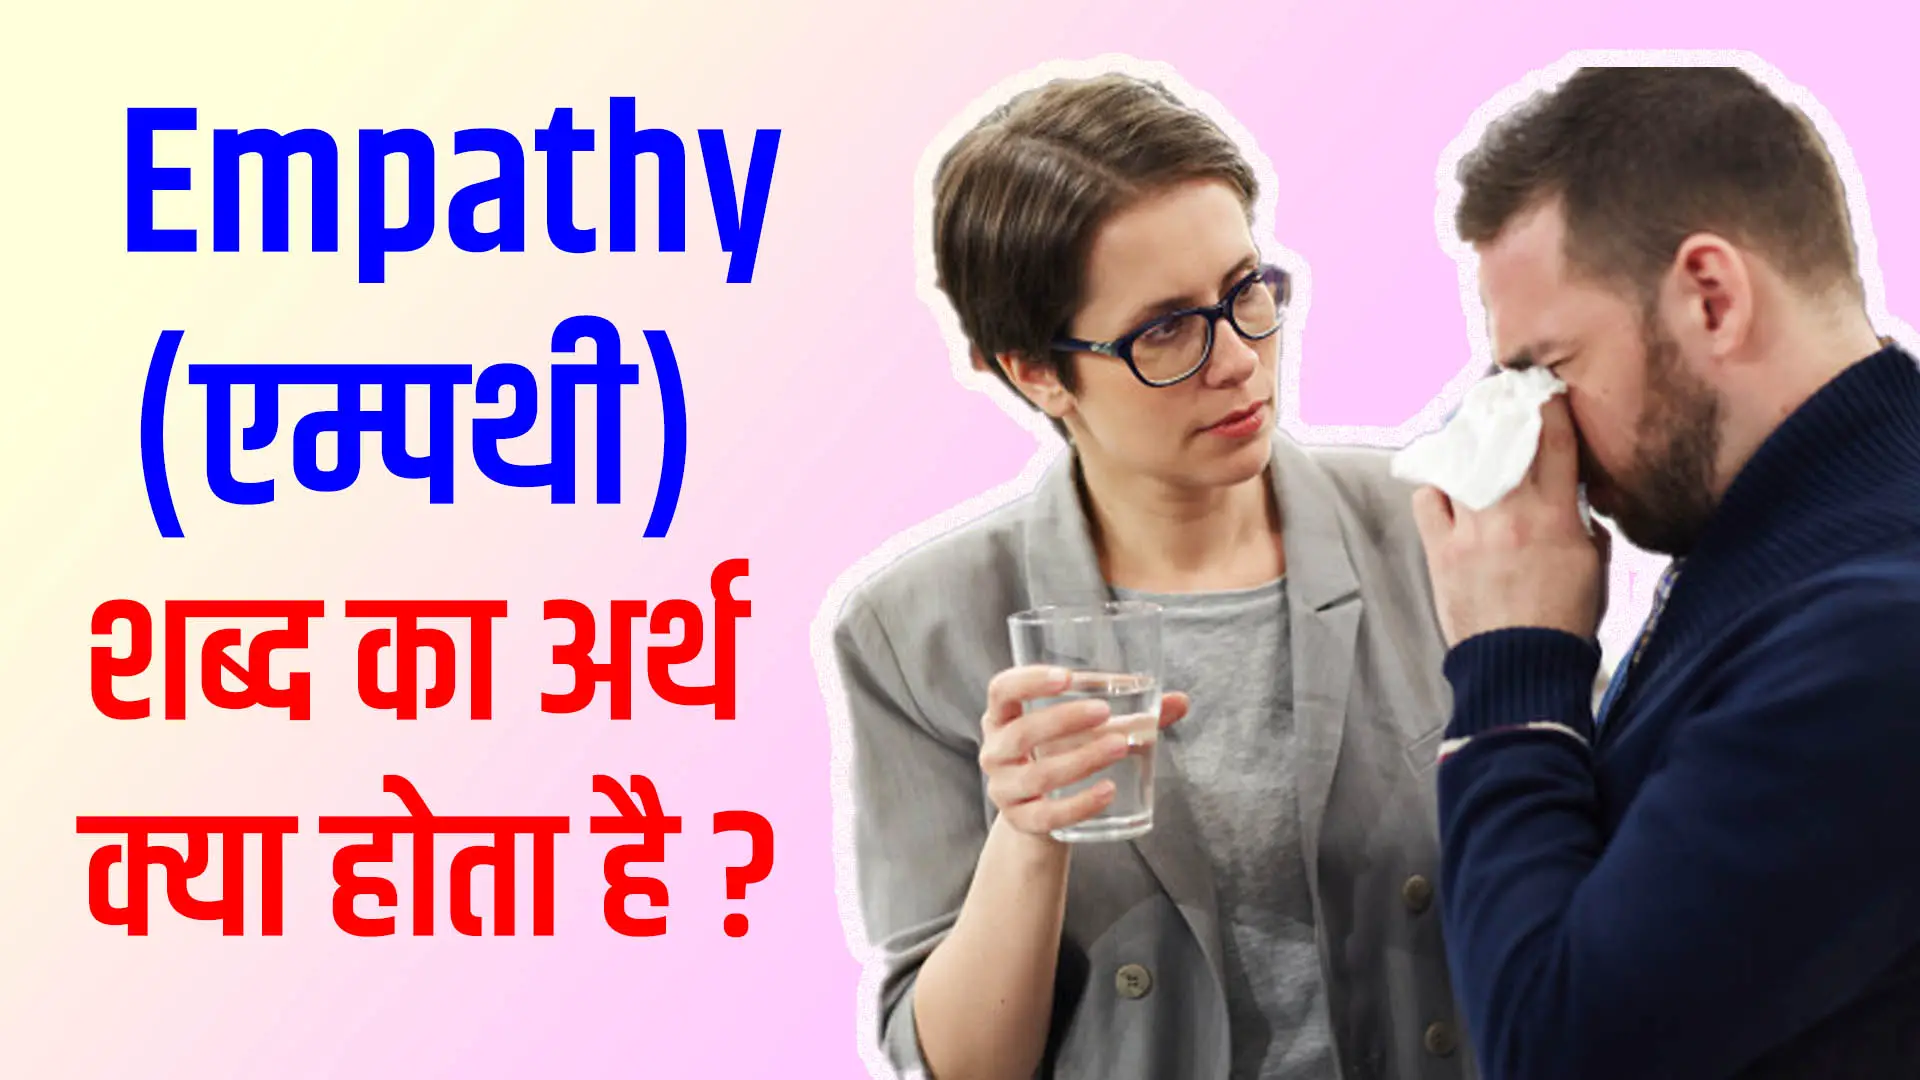 empathy essay in hindi